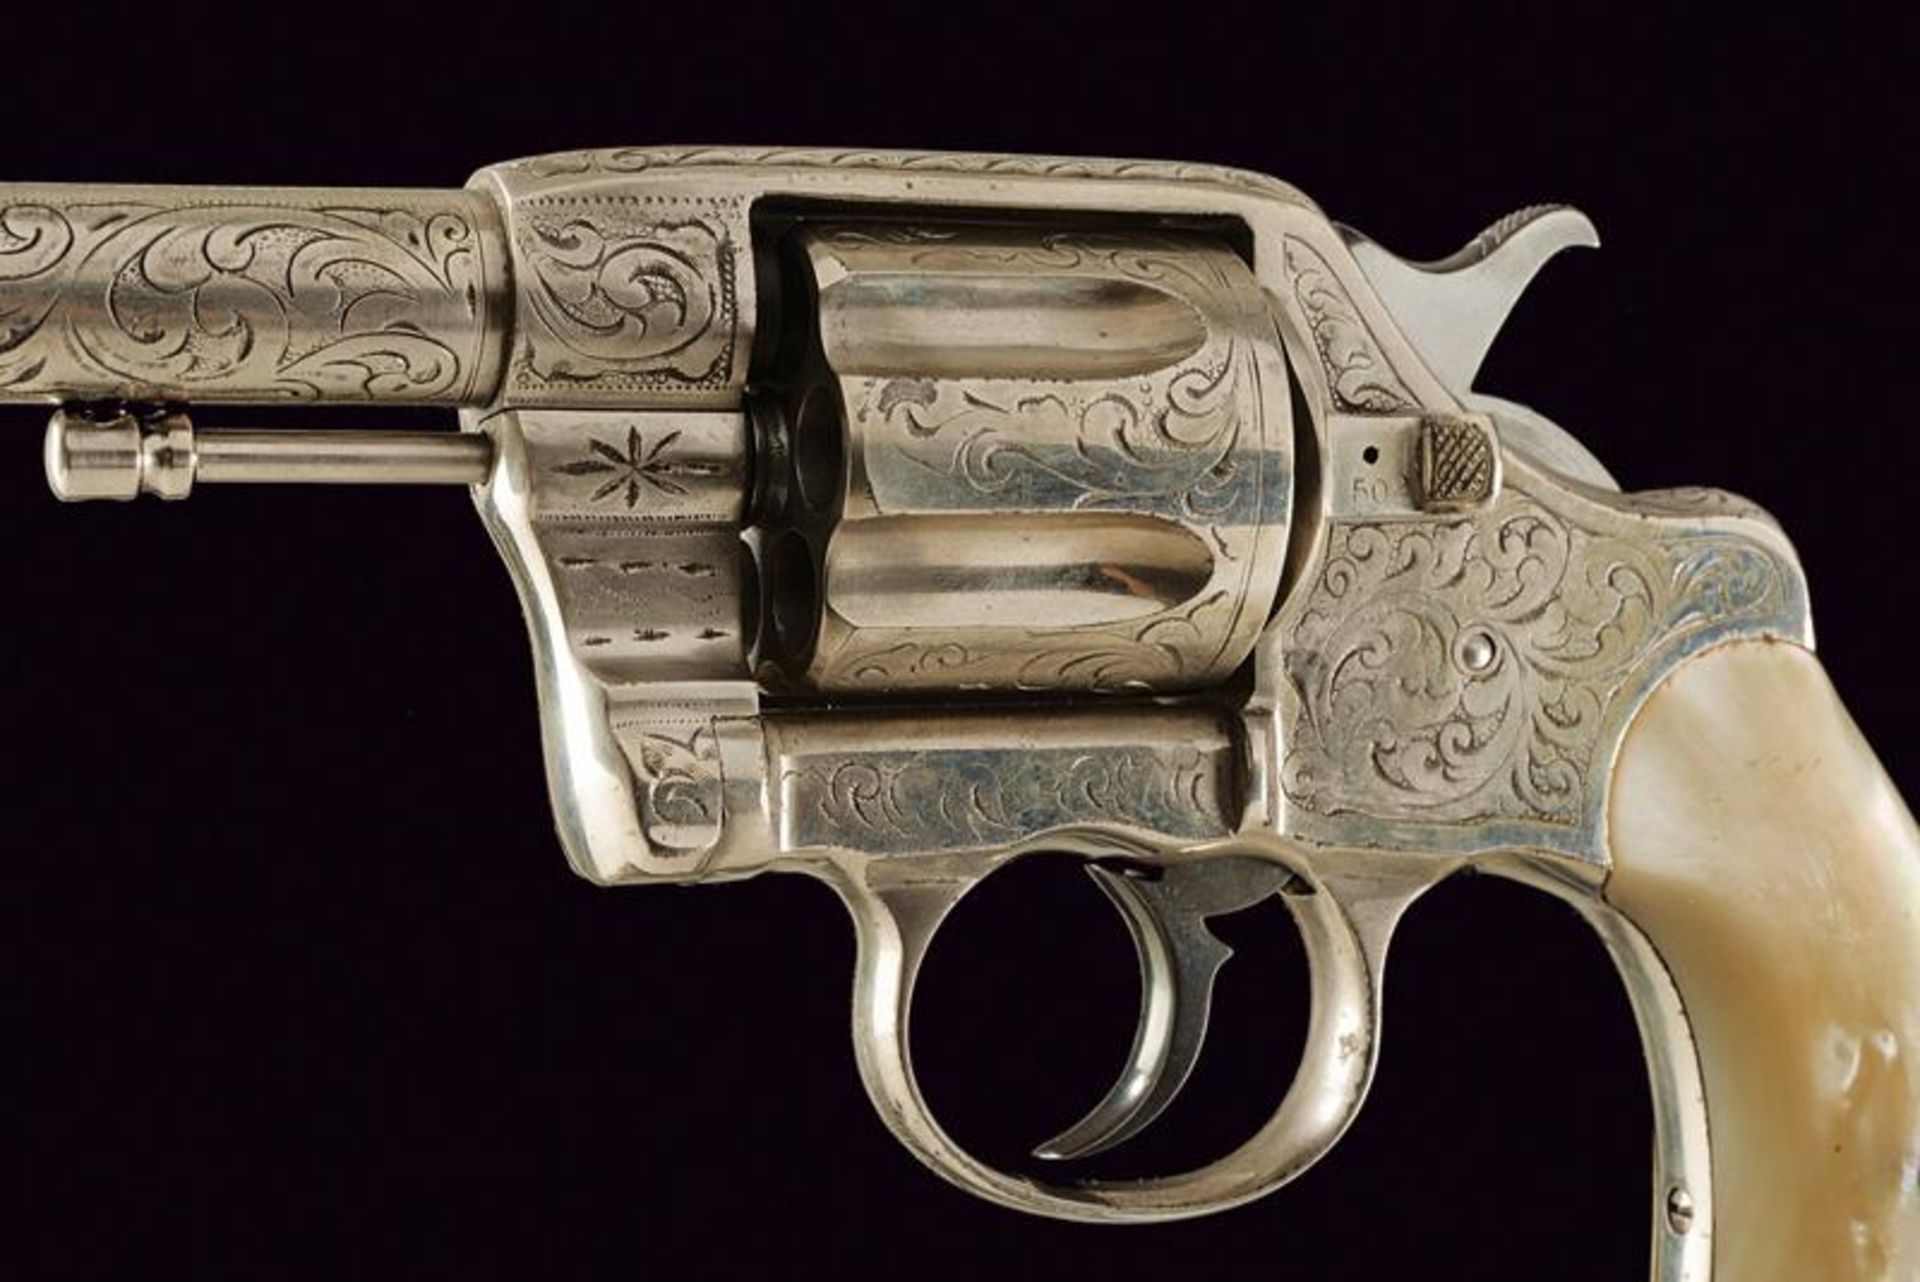 An engraved 1889 model Colt revolver - Image 2 of 4